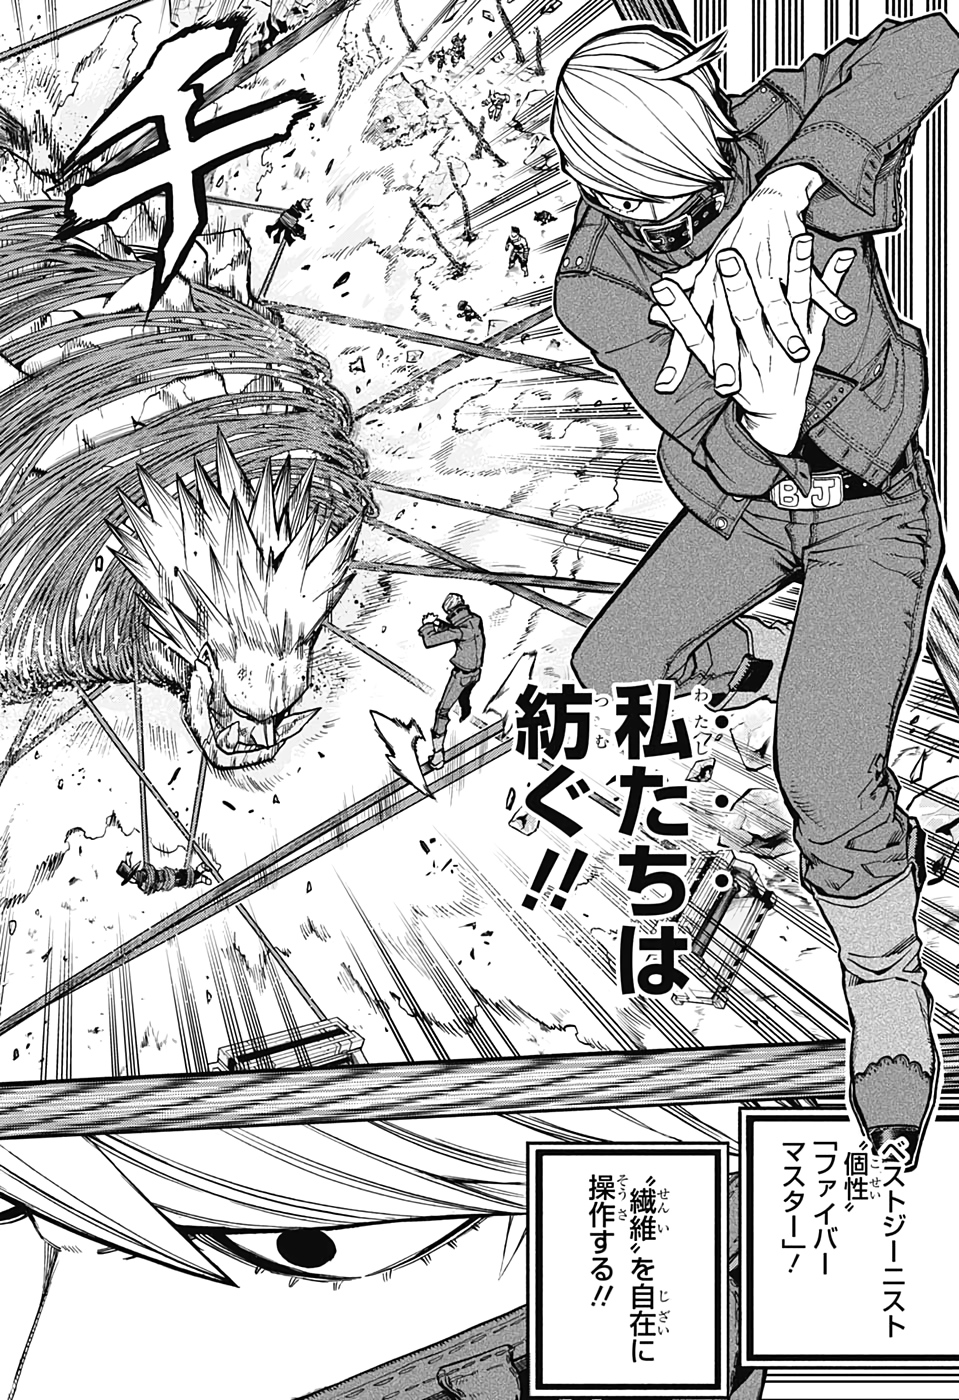 Boku no Hero Academia - Chapter 292 - Page 2